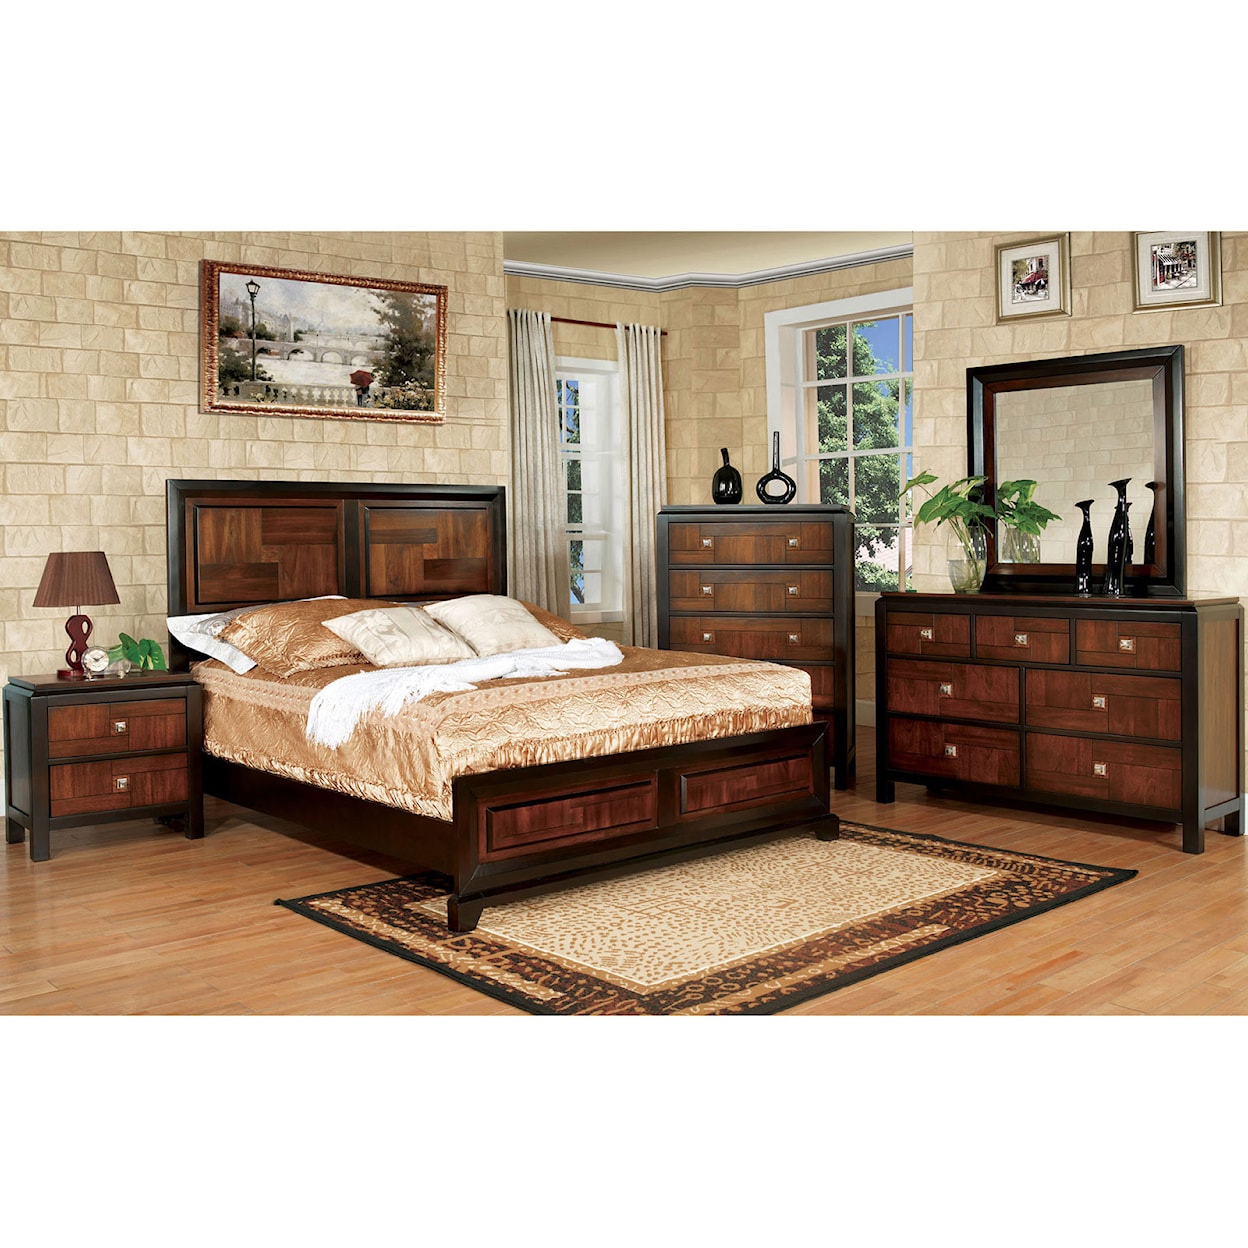 Furniture of America Patra 5-Piece Queen Bedroom Set